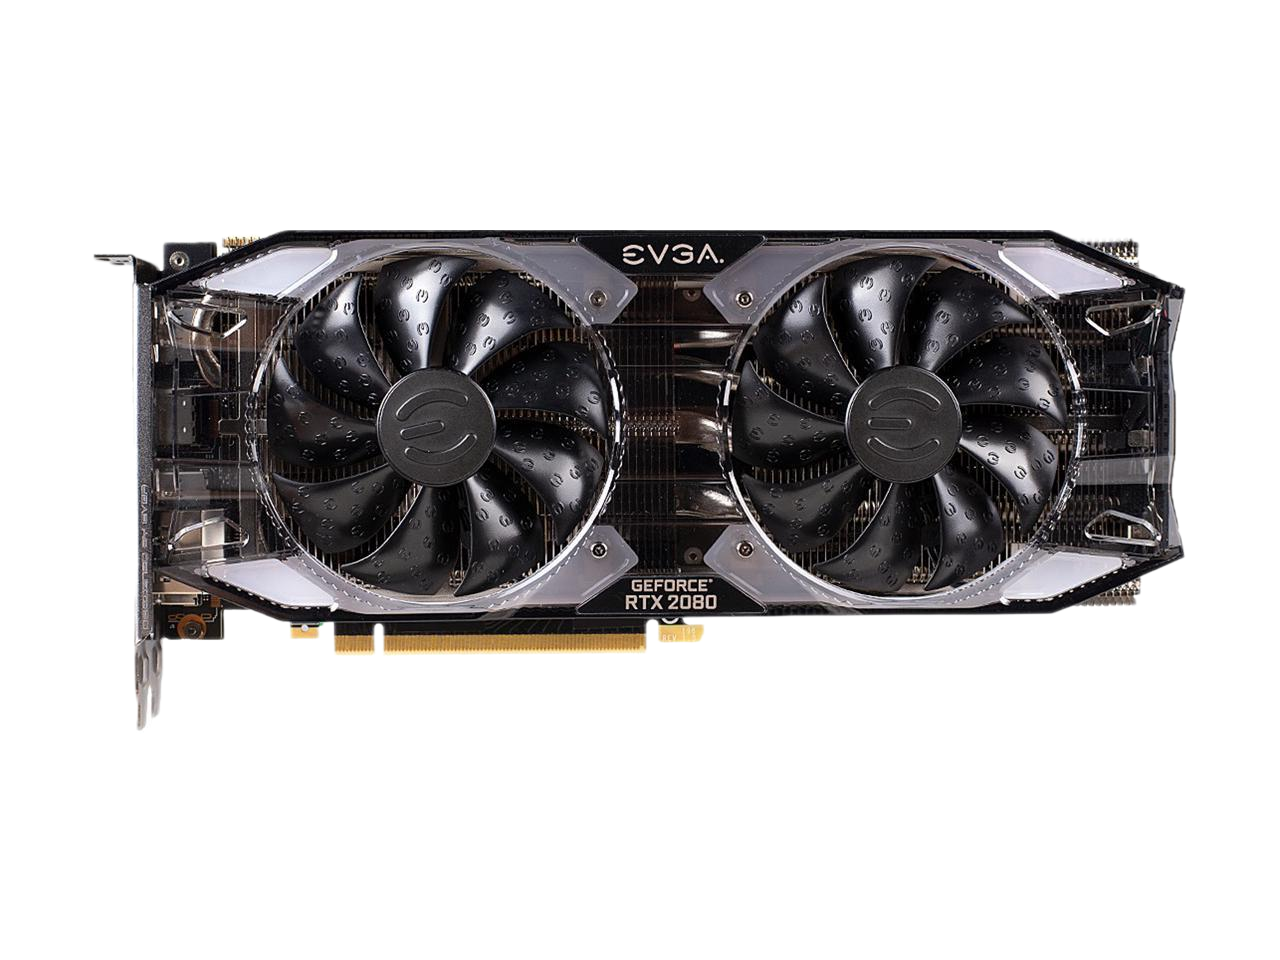 EVGA GeForce RTX 2080 XC GAMING 8GB GDDR6 Dual HDB Fans & RGB LED Video Graphics Card 08G-P4-2182-KR